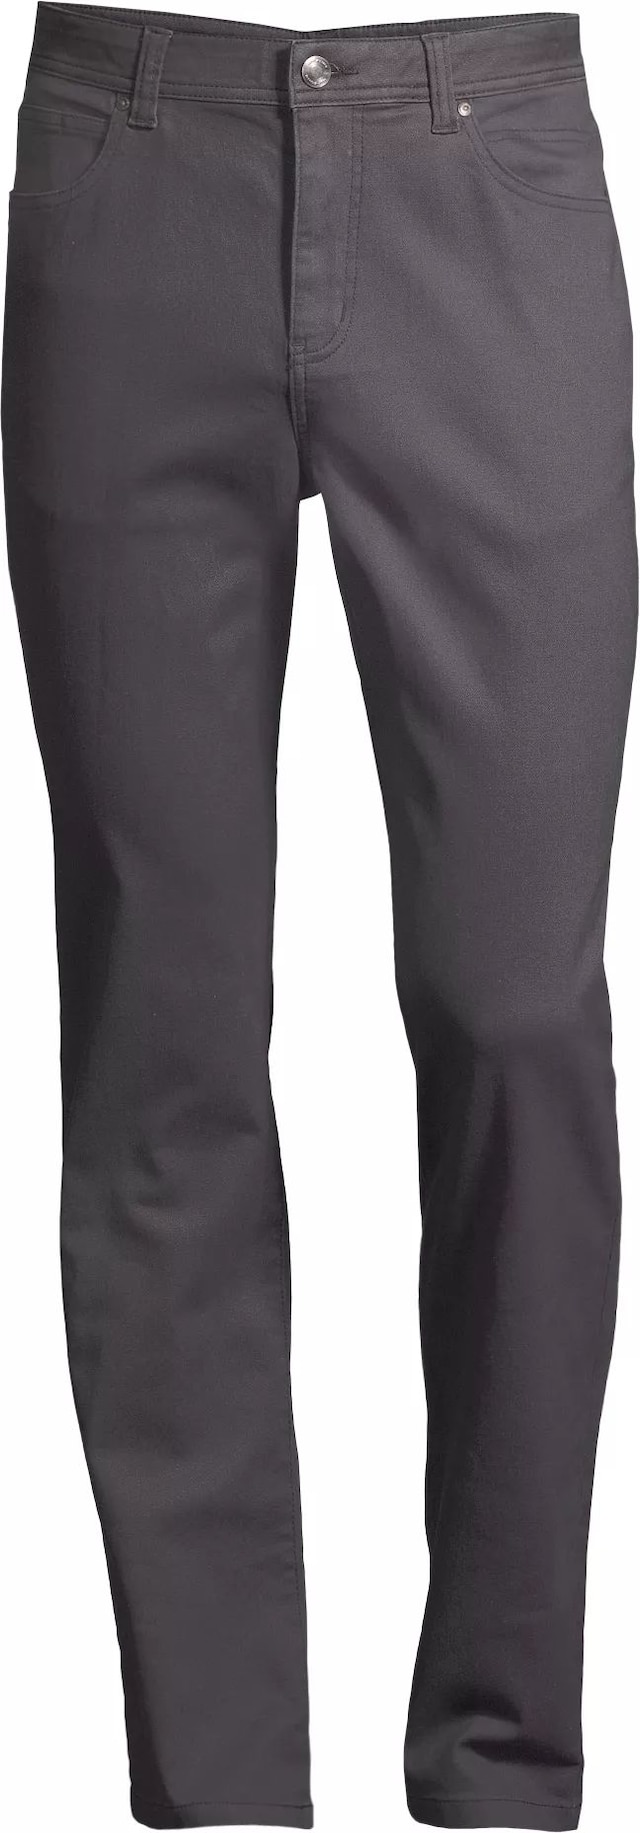 Ripzone Men's Mesa 5 Pocket 34 Inch Pants | Sportchek